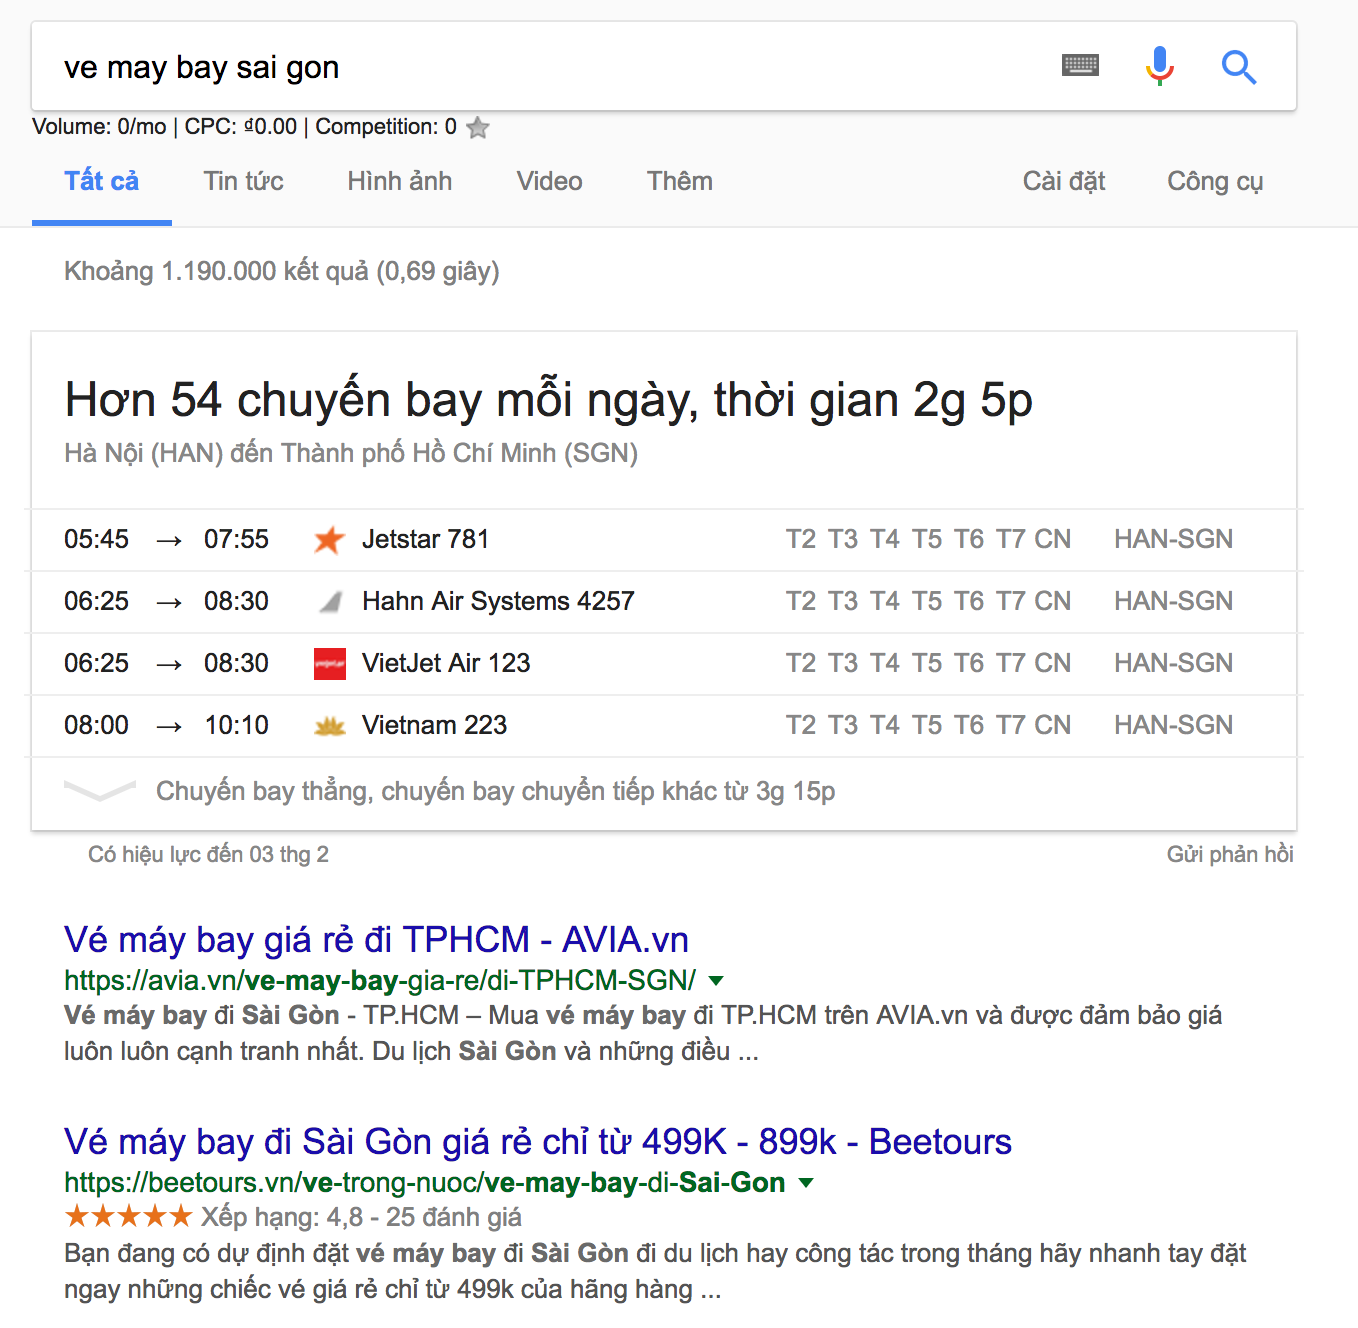 Google hien thi thong tin chuyen bay